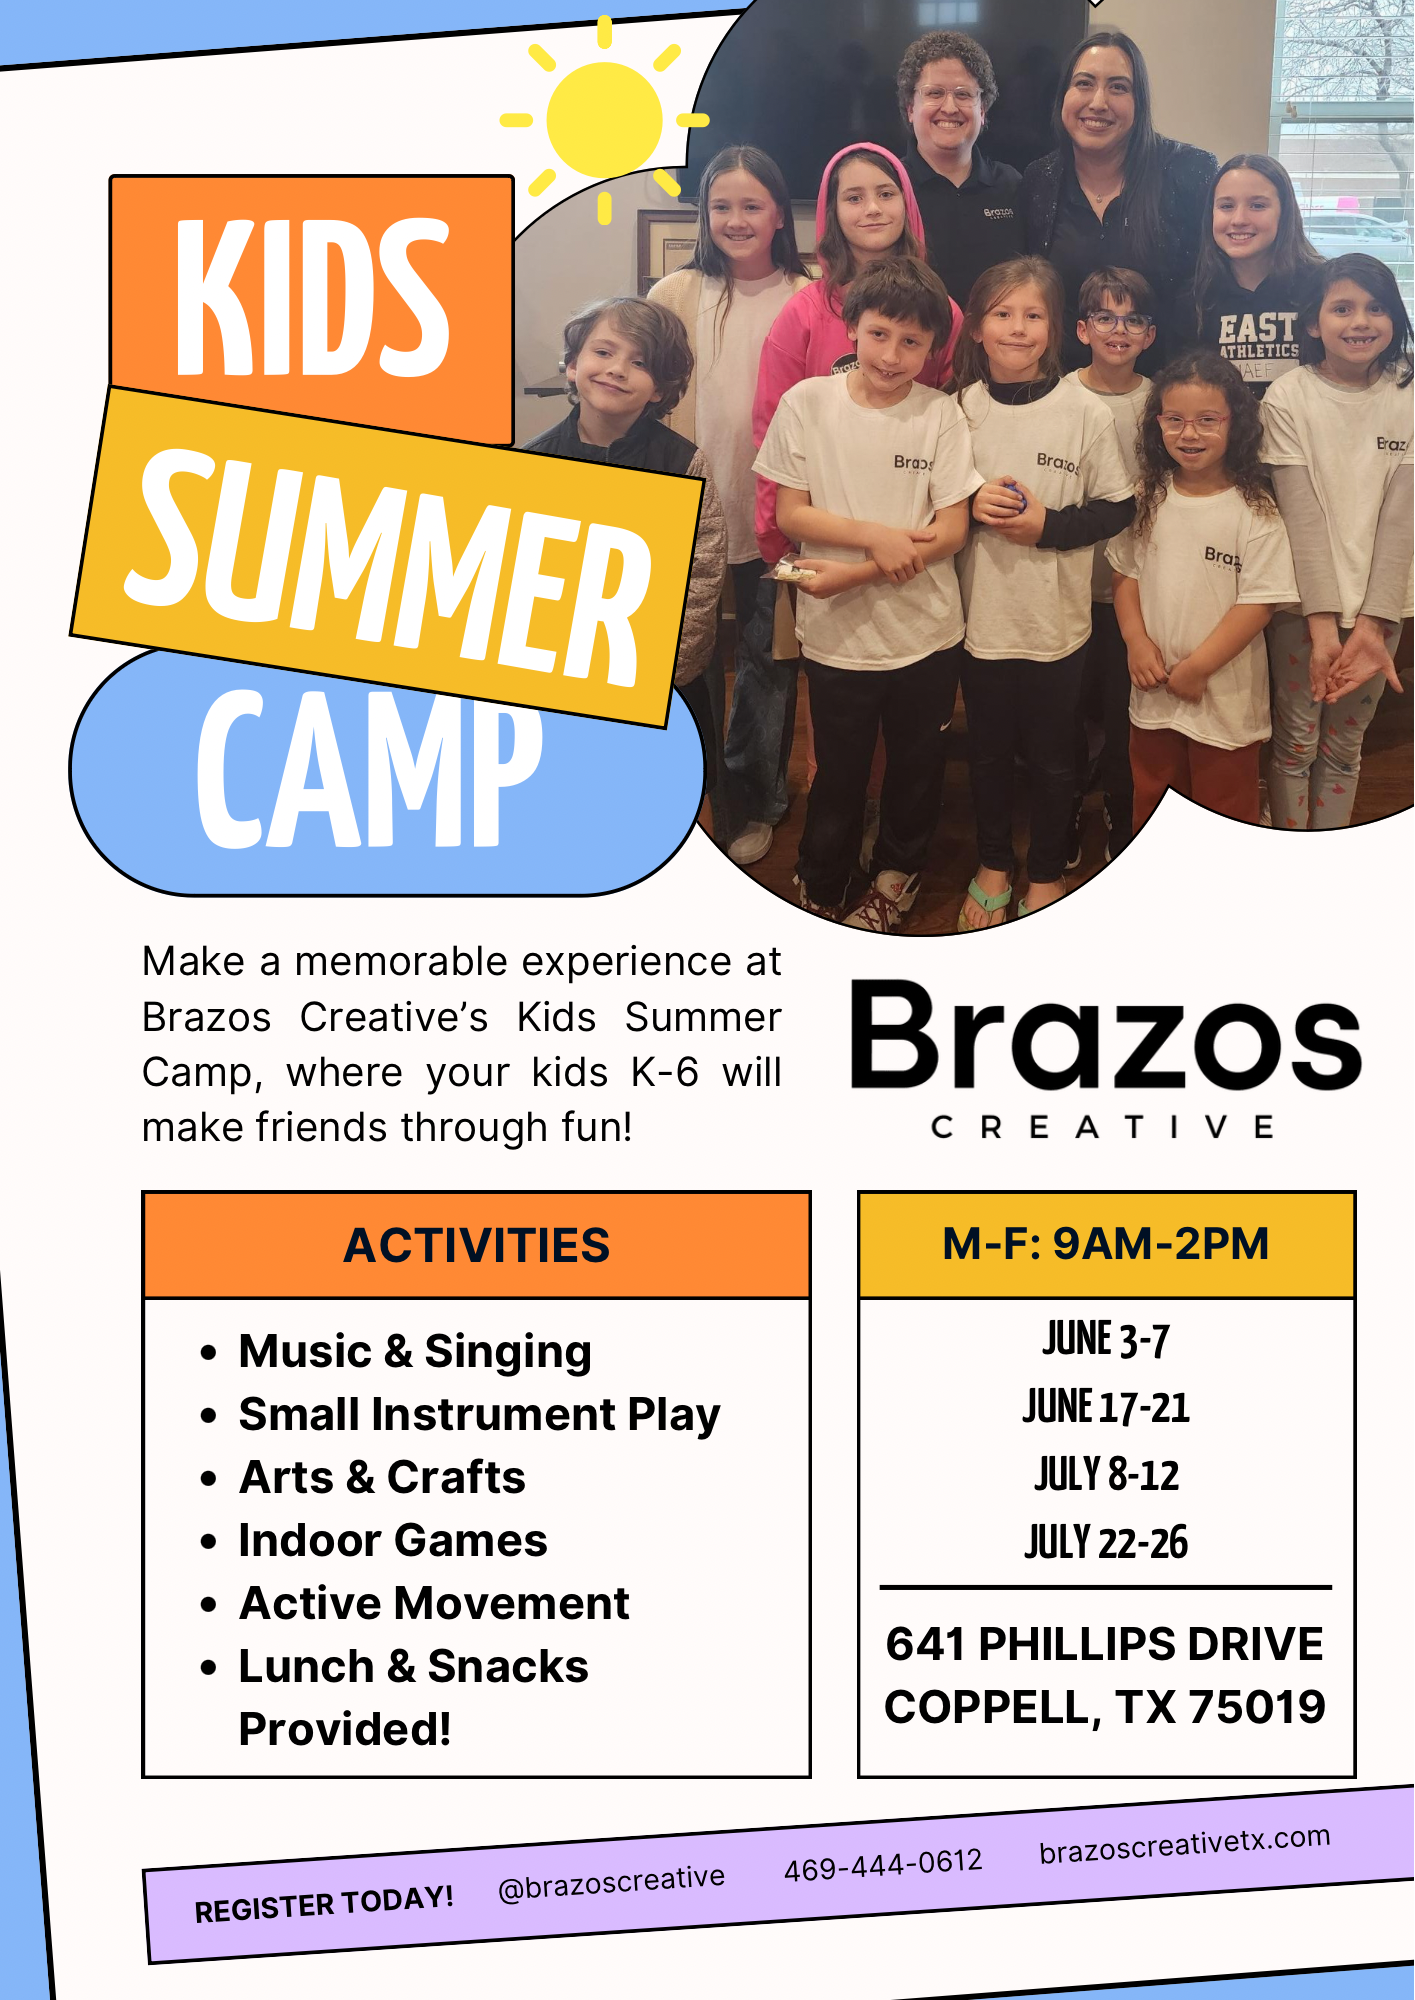 Kids Summer Camp flyer for Brazos Creative.